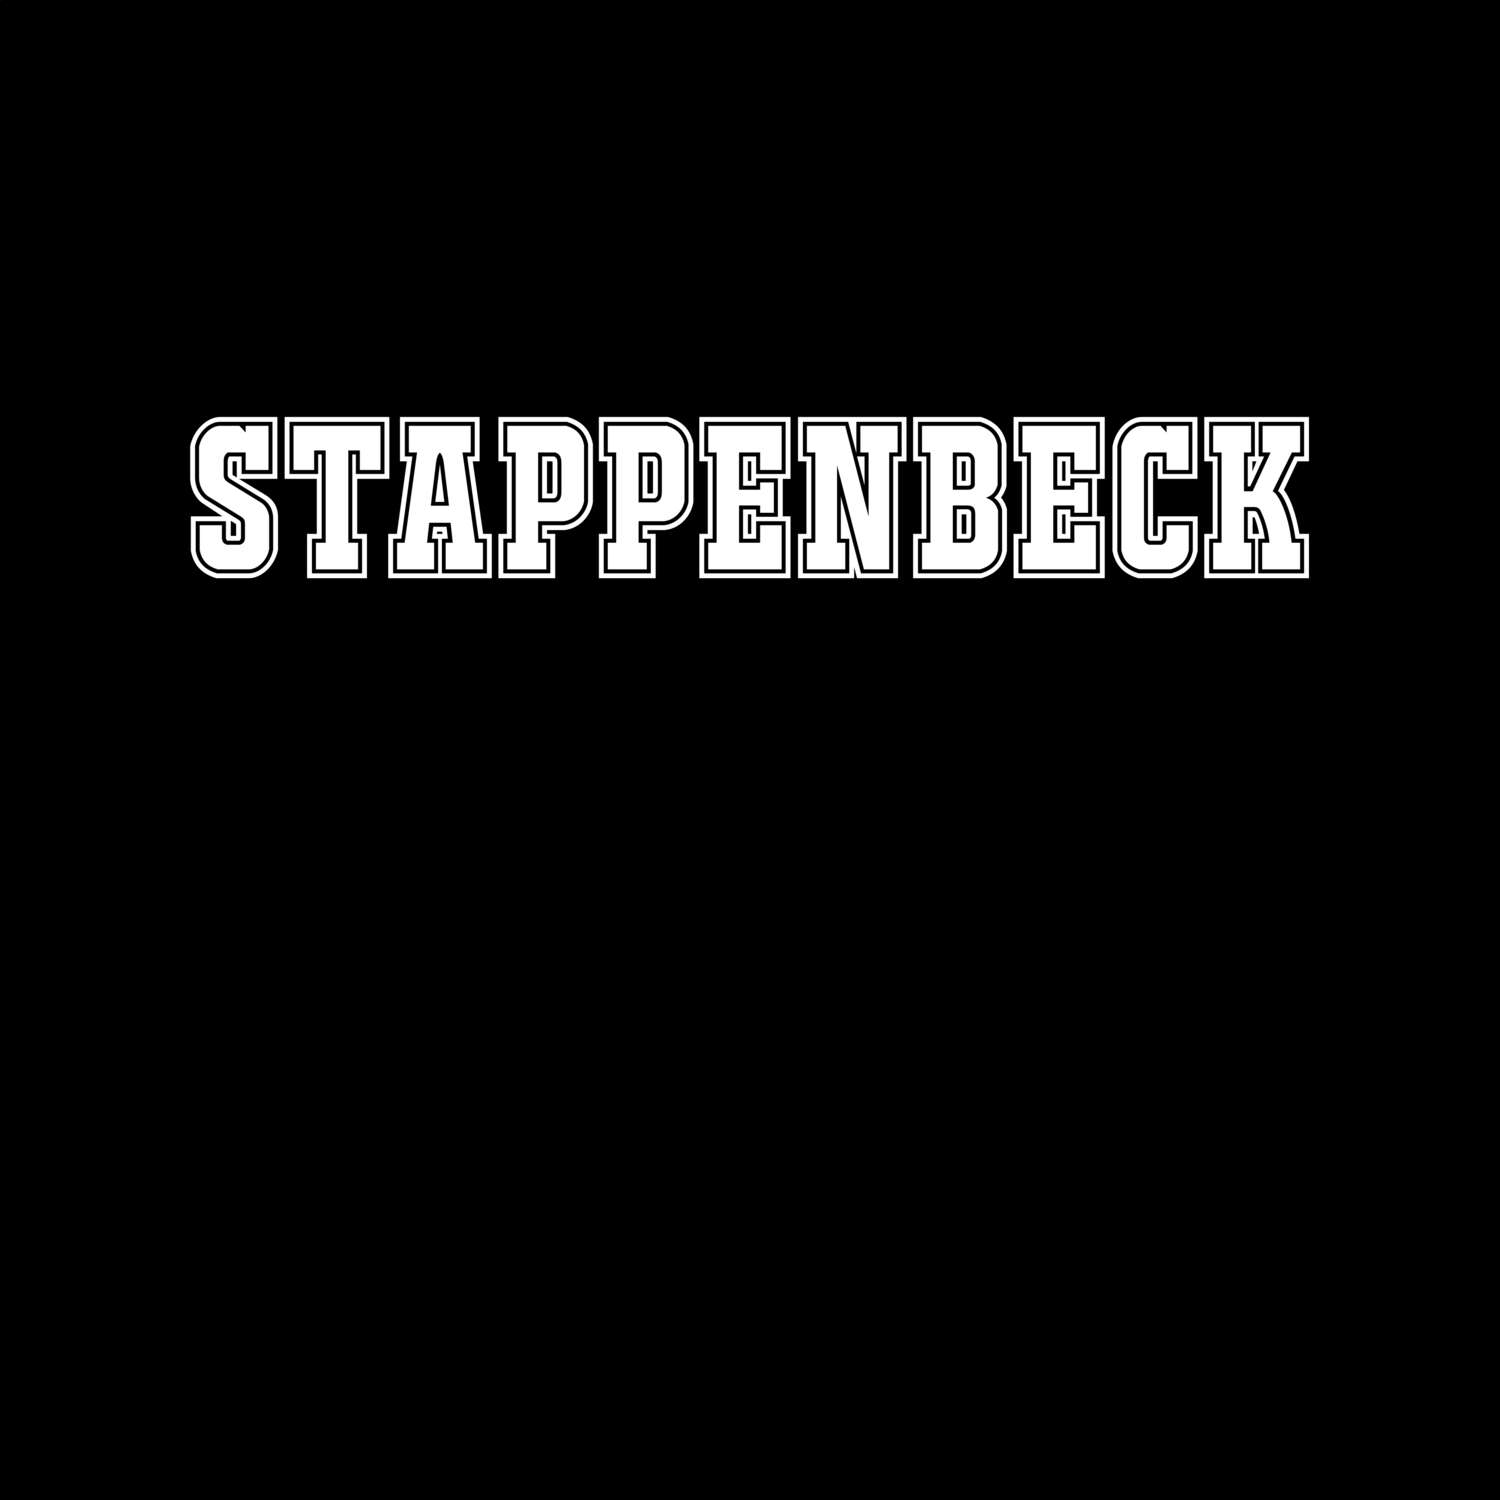 Stappenbeck T-Shirt »Classic«